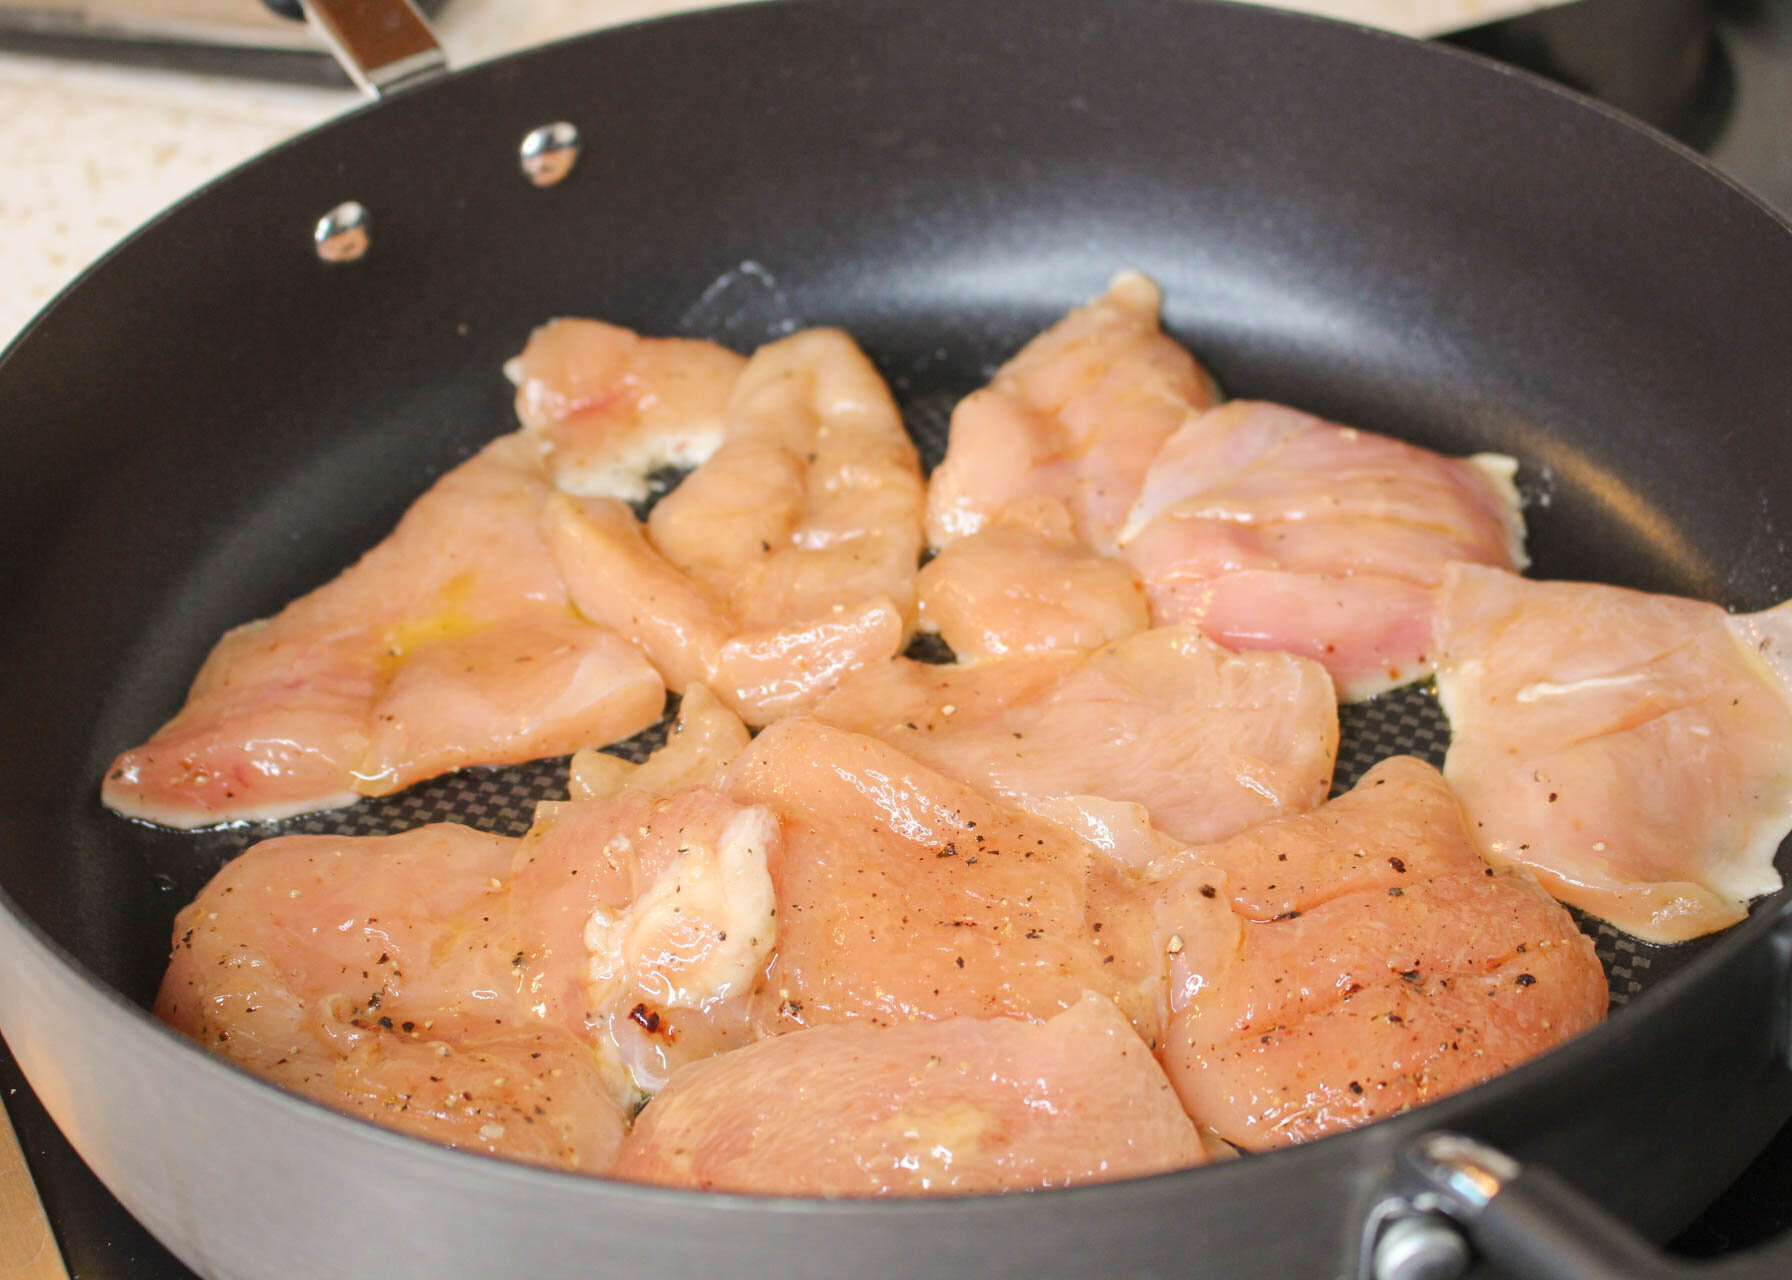 Place chicken into skillet, medium high heat